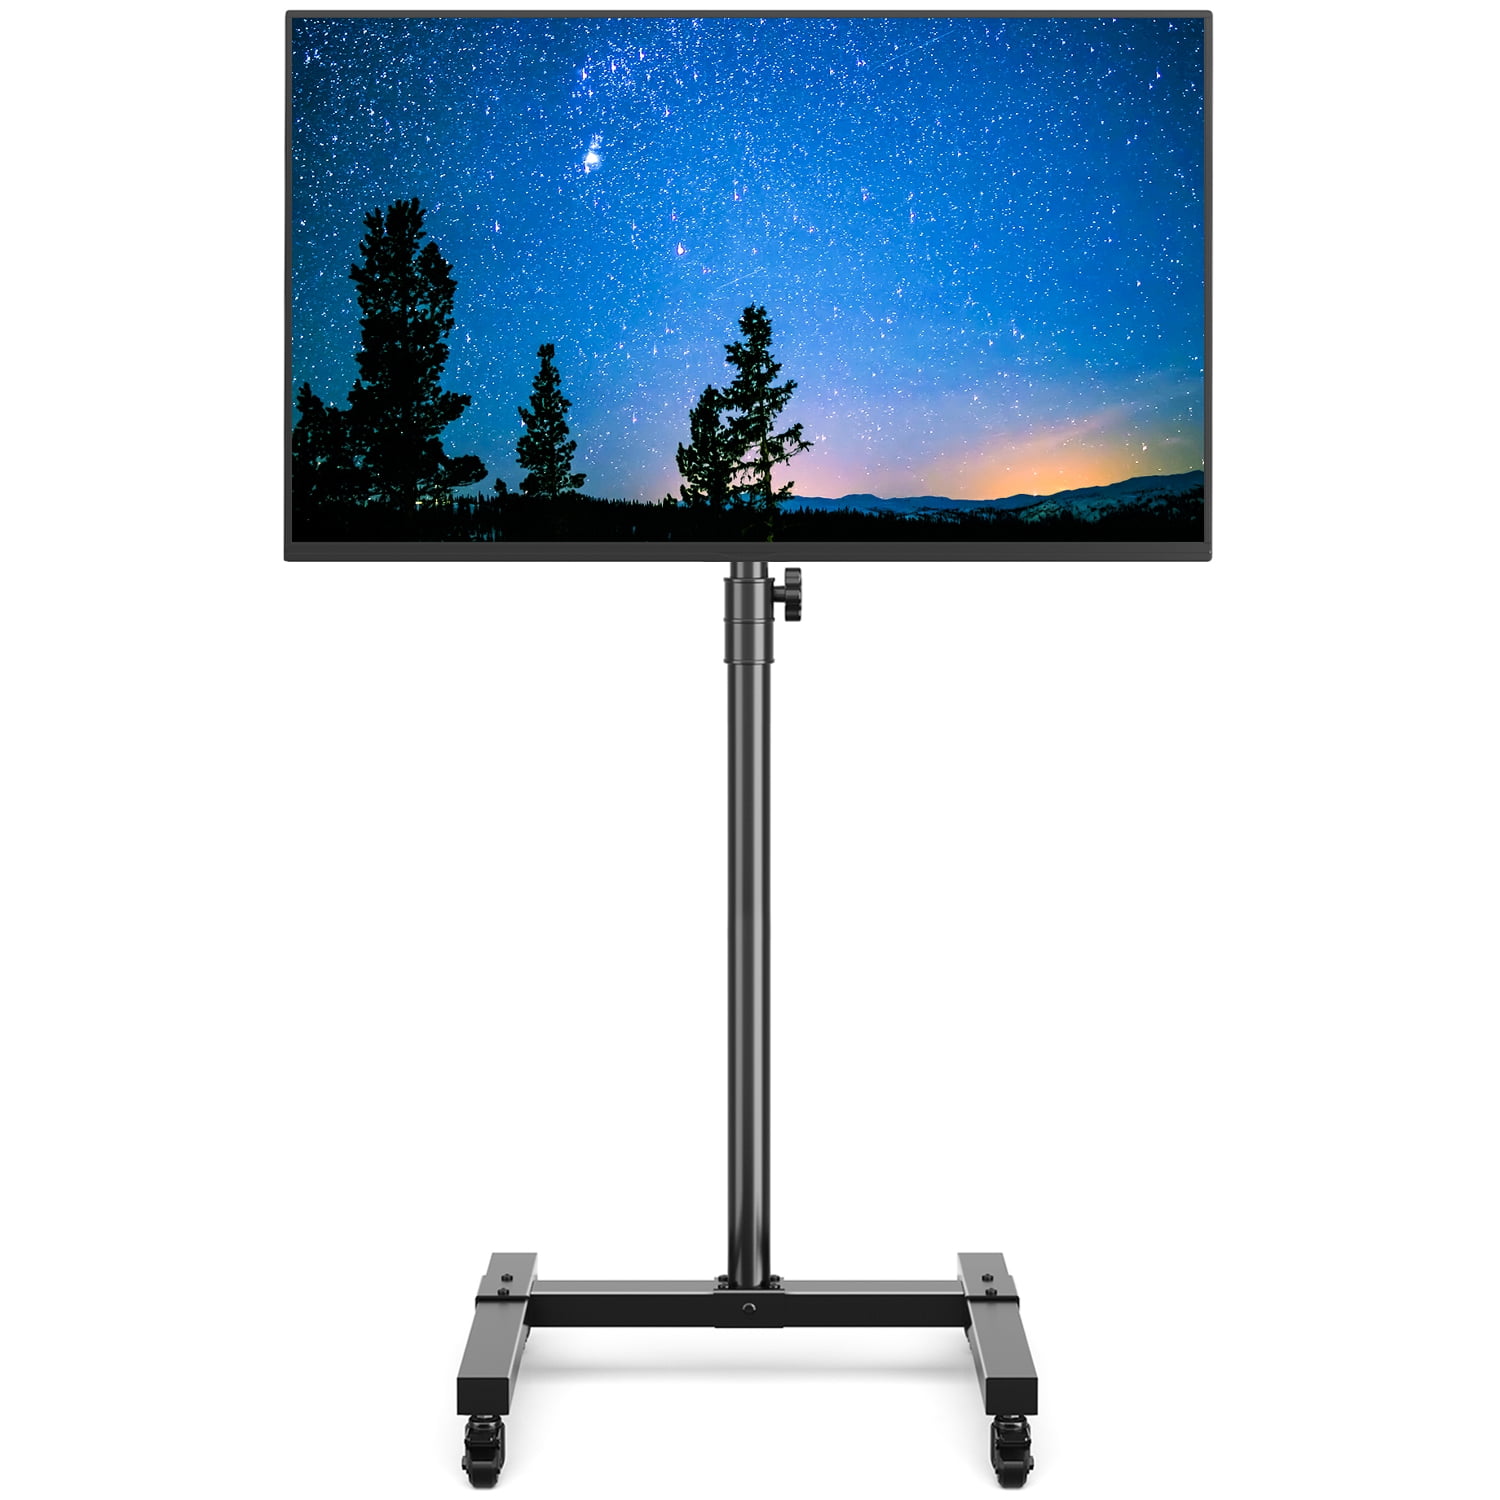 Aleratec Heavy Duty 12-inch Swivel Rotating TV Stand Mount Flat Panel LED